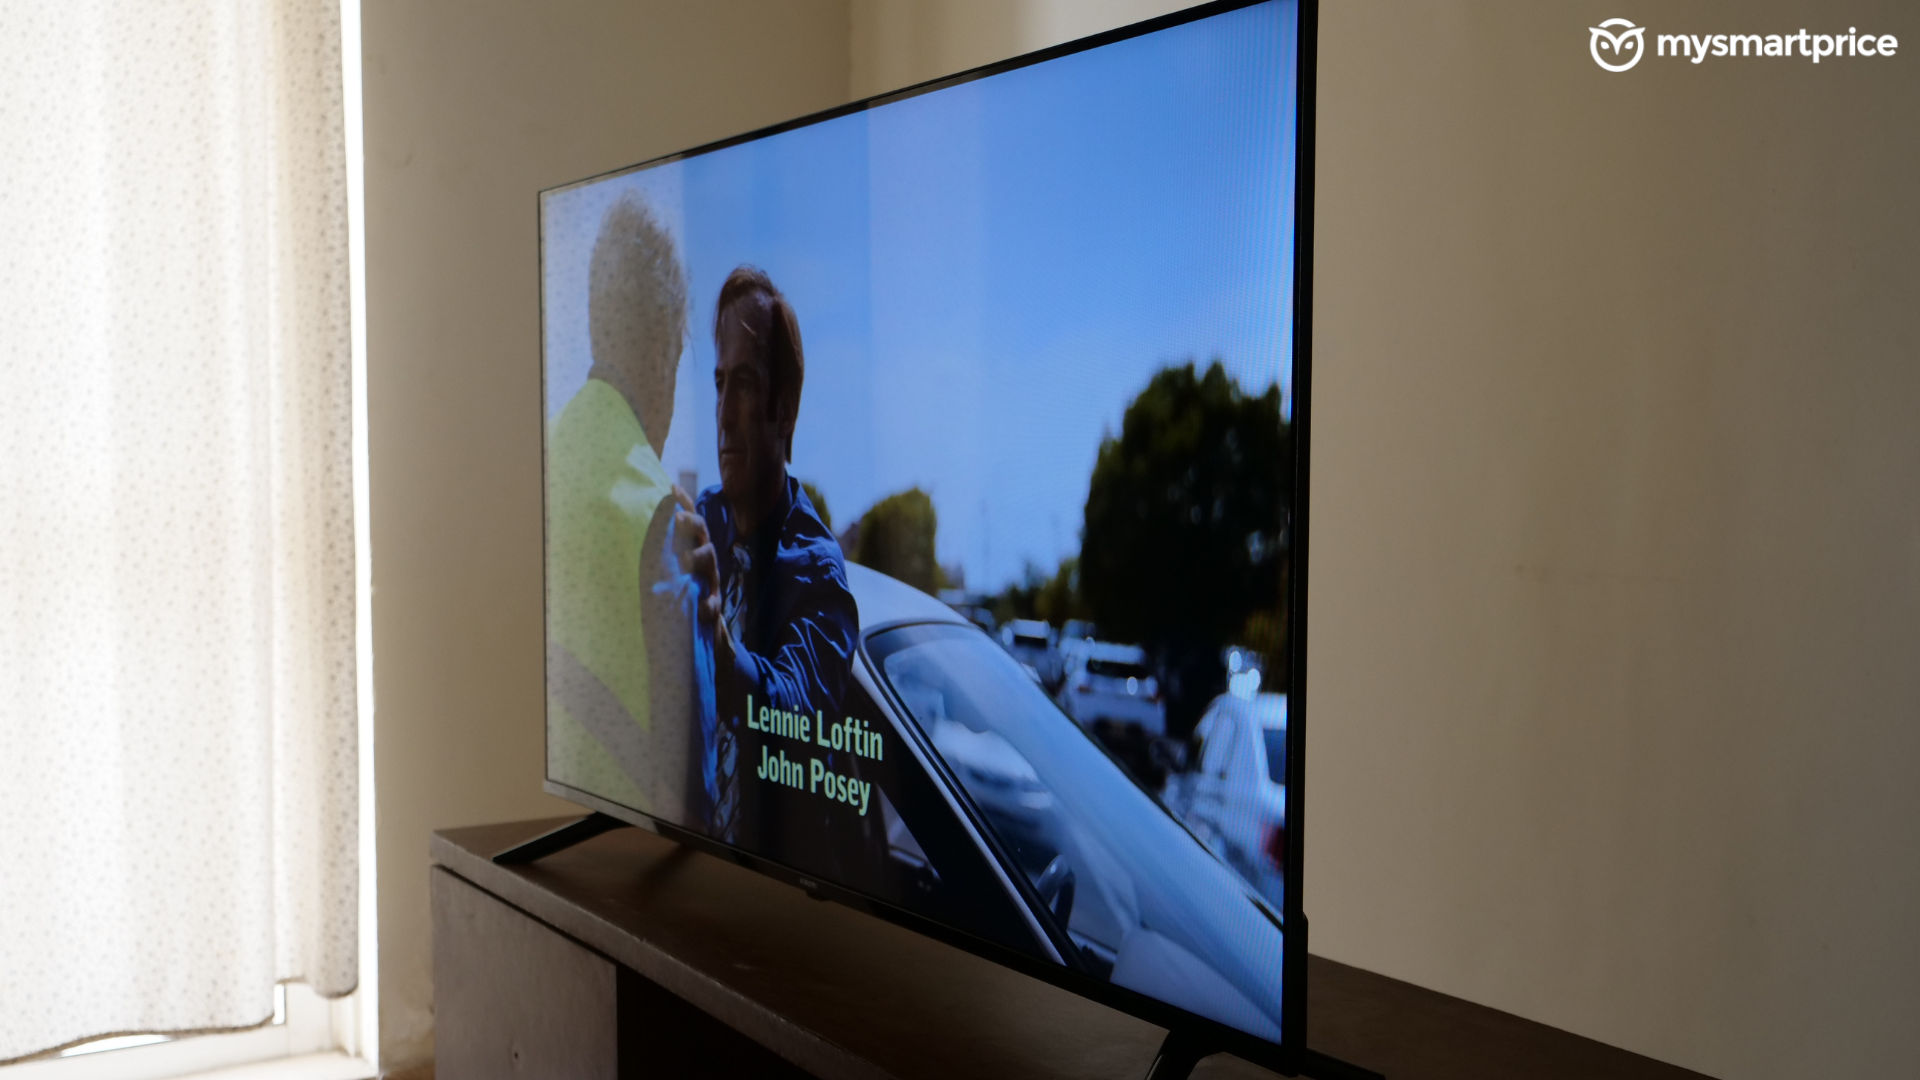 Xiaomi Smart TV 5A 43-Inch Review: Good Display, Better Value - MySmartPrice